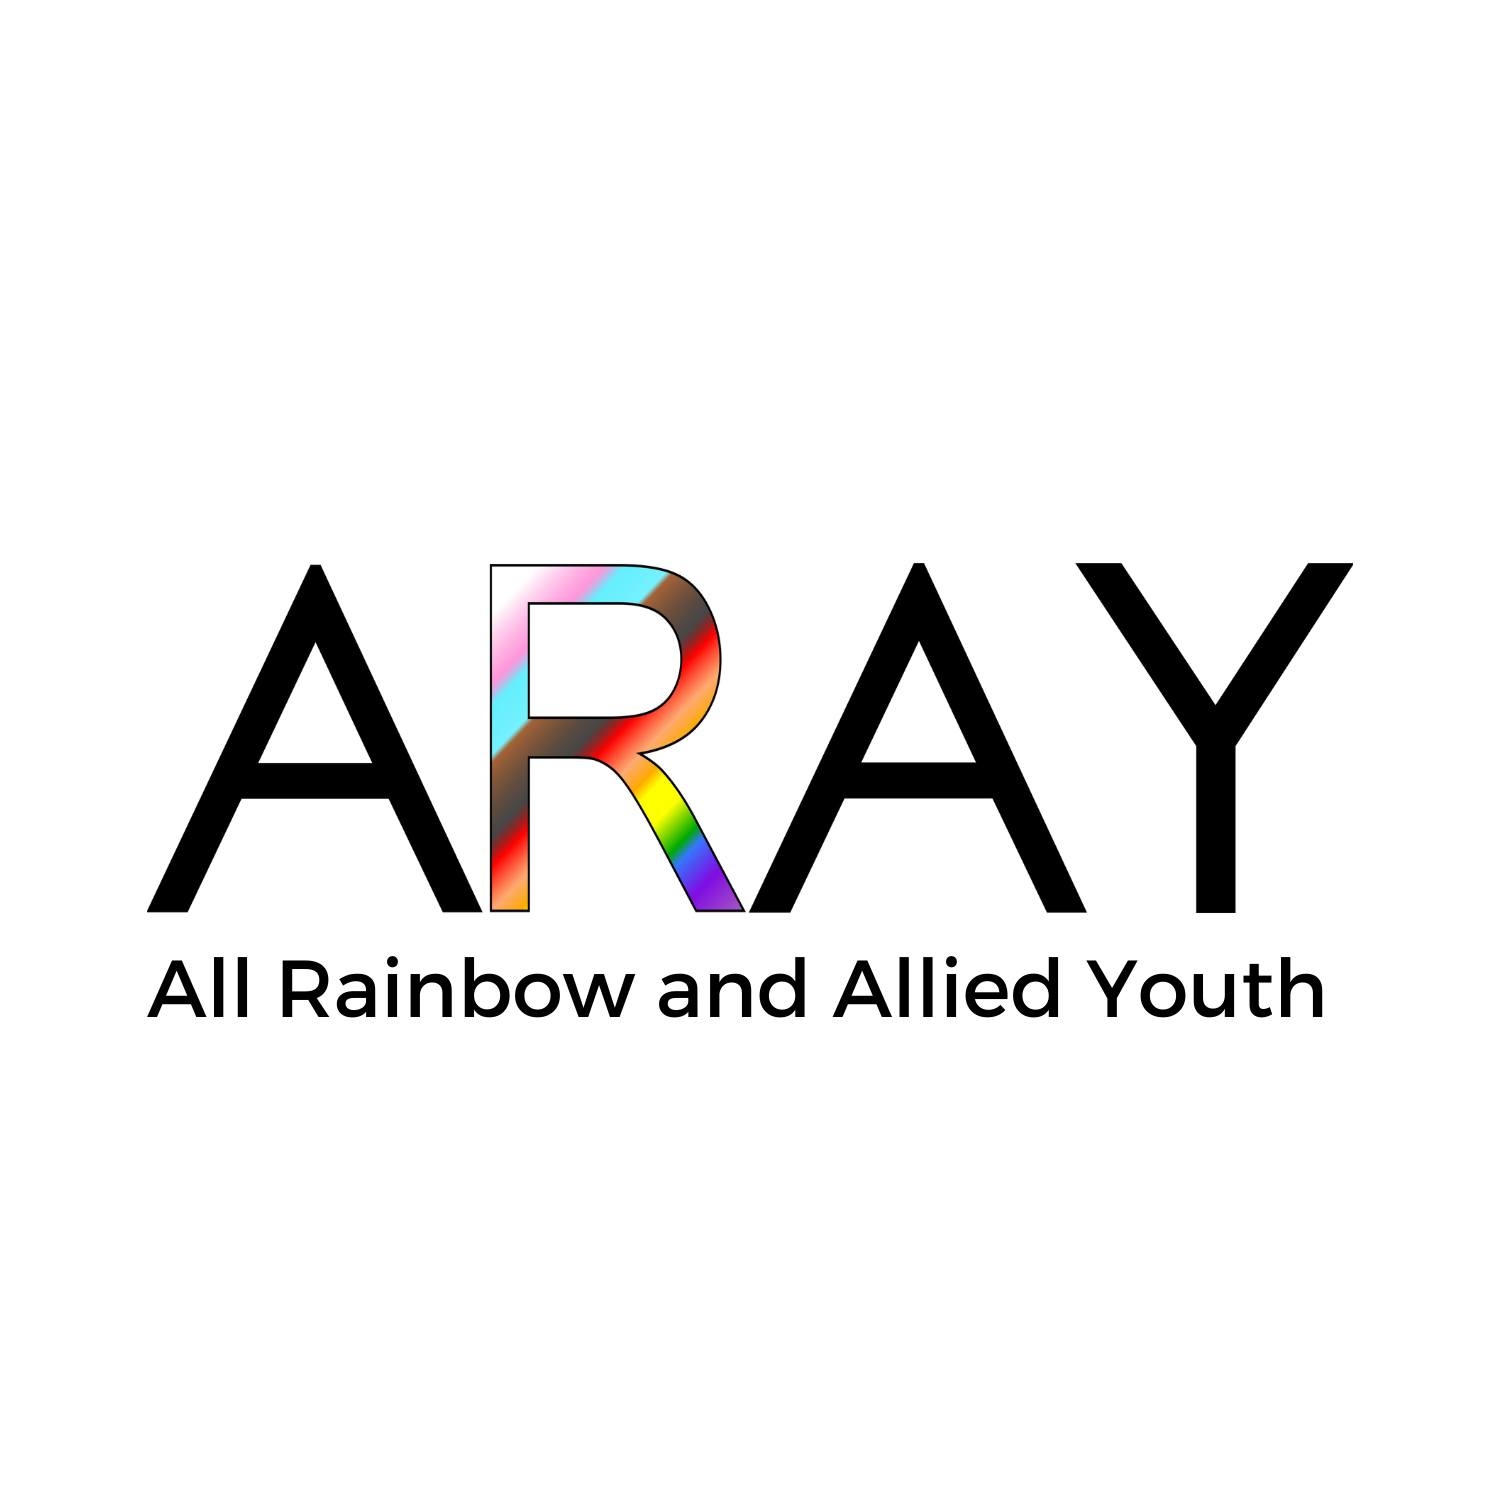 LGBTQ Organization in Miami Florida - All Rainbow and Allied Youth